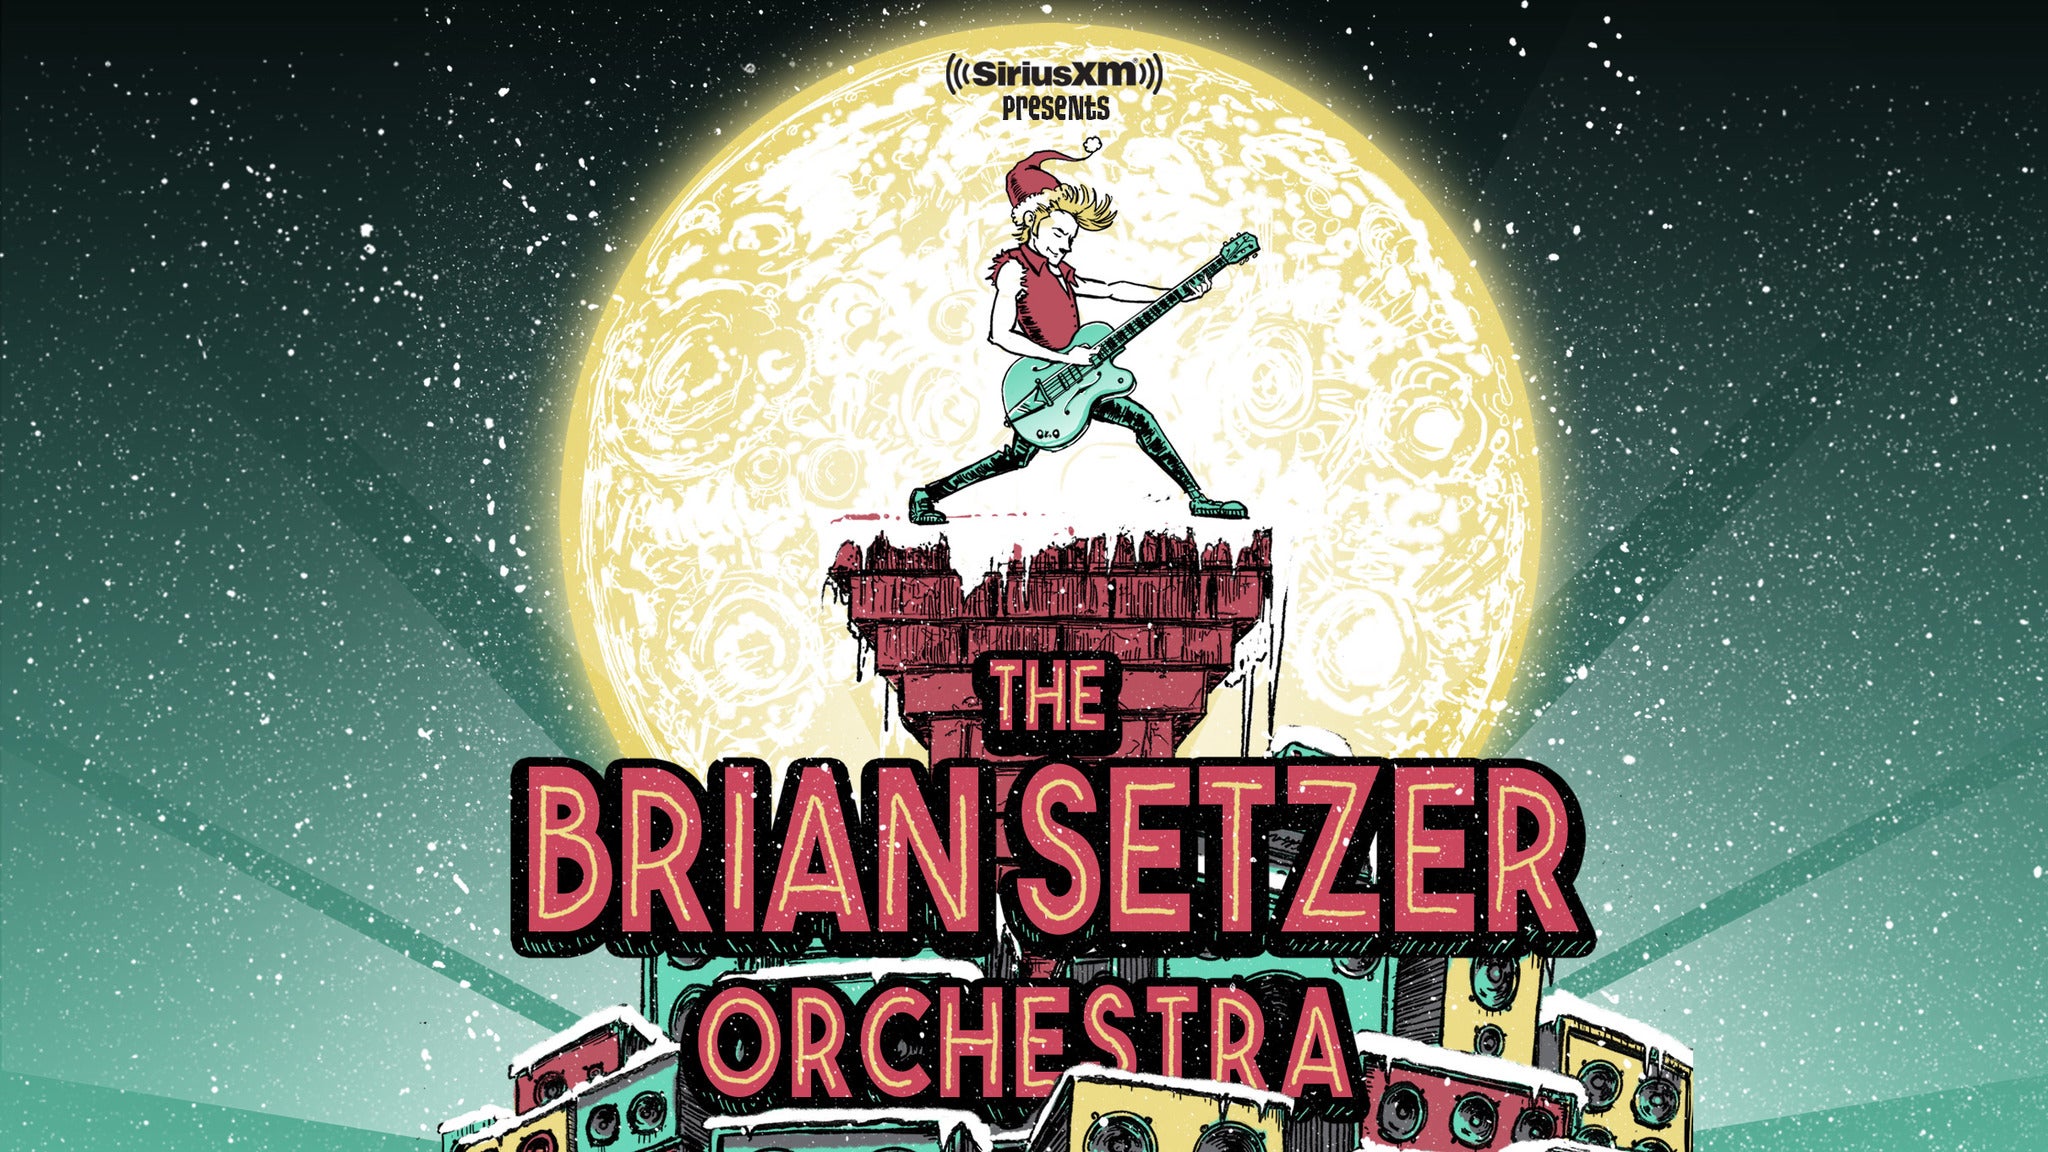 The Brian Setzer Orchestra's 16th Annual Christmas Rocks! Tour in Washington promo photo for SiriusXM presale offer code